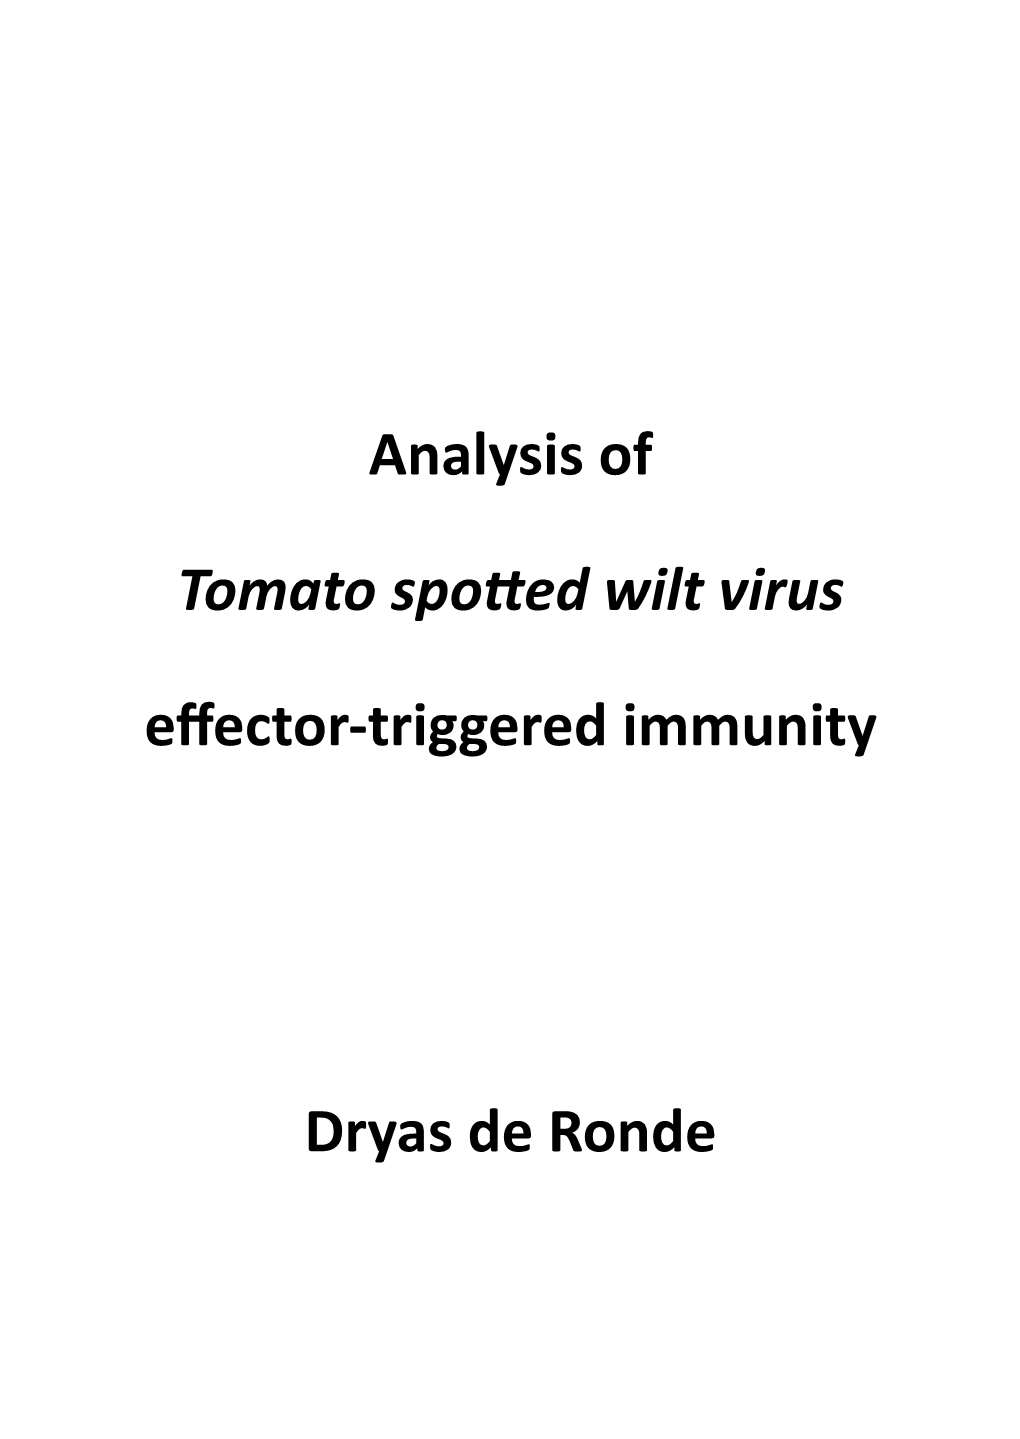 Analysis of Tomato Spotted Wilt Virus Effector-Triggered Immunity